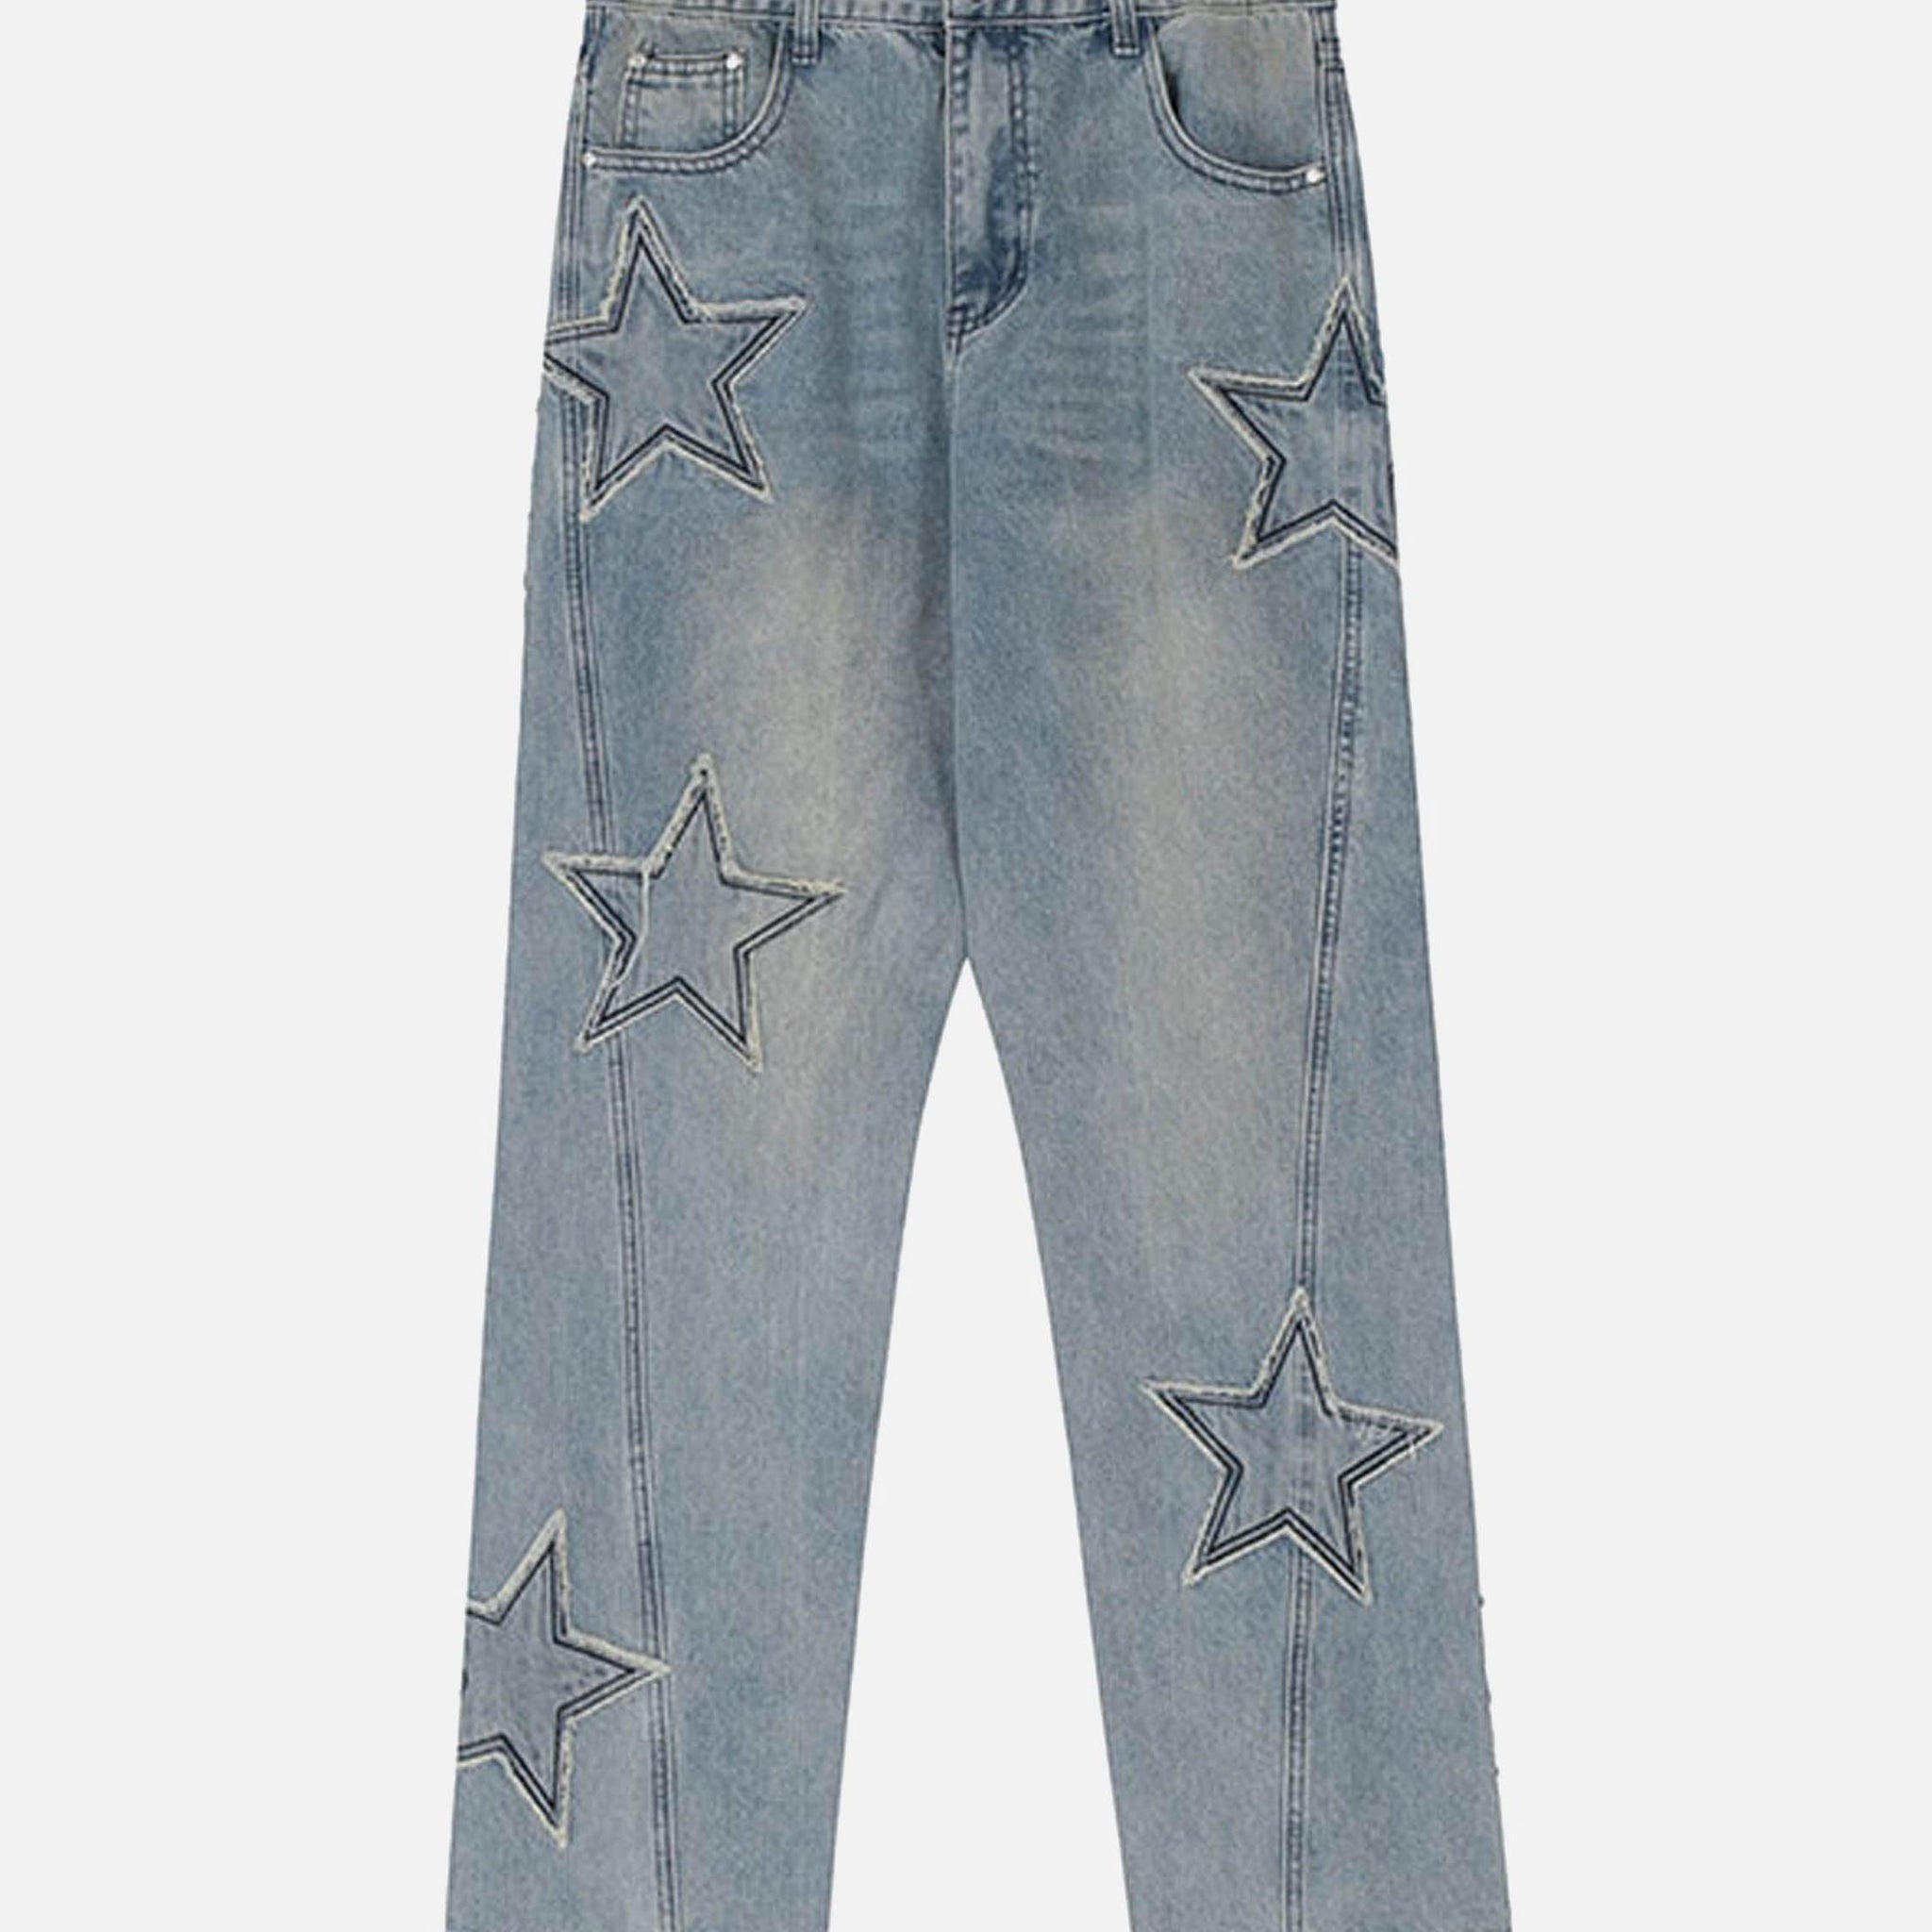 'Big Stars' Jeans